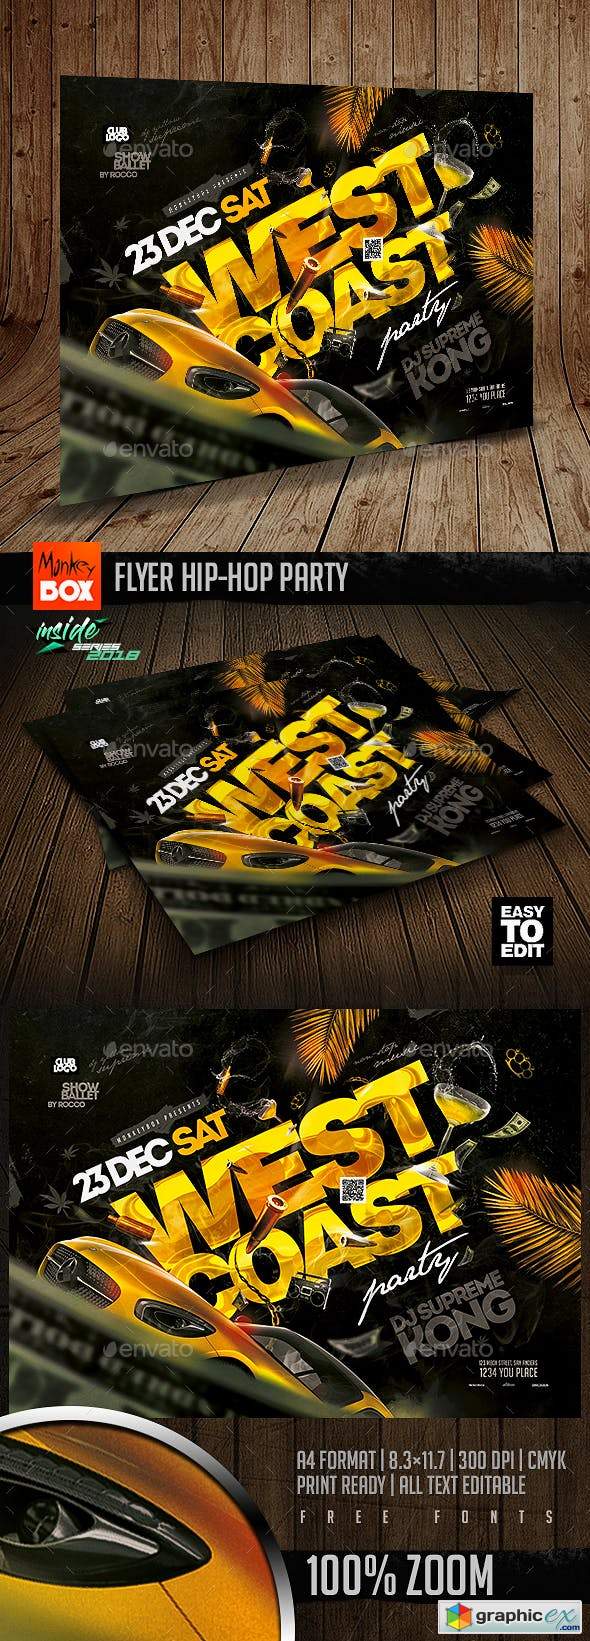 Flyer Hip-Hop Party